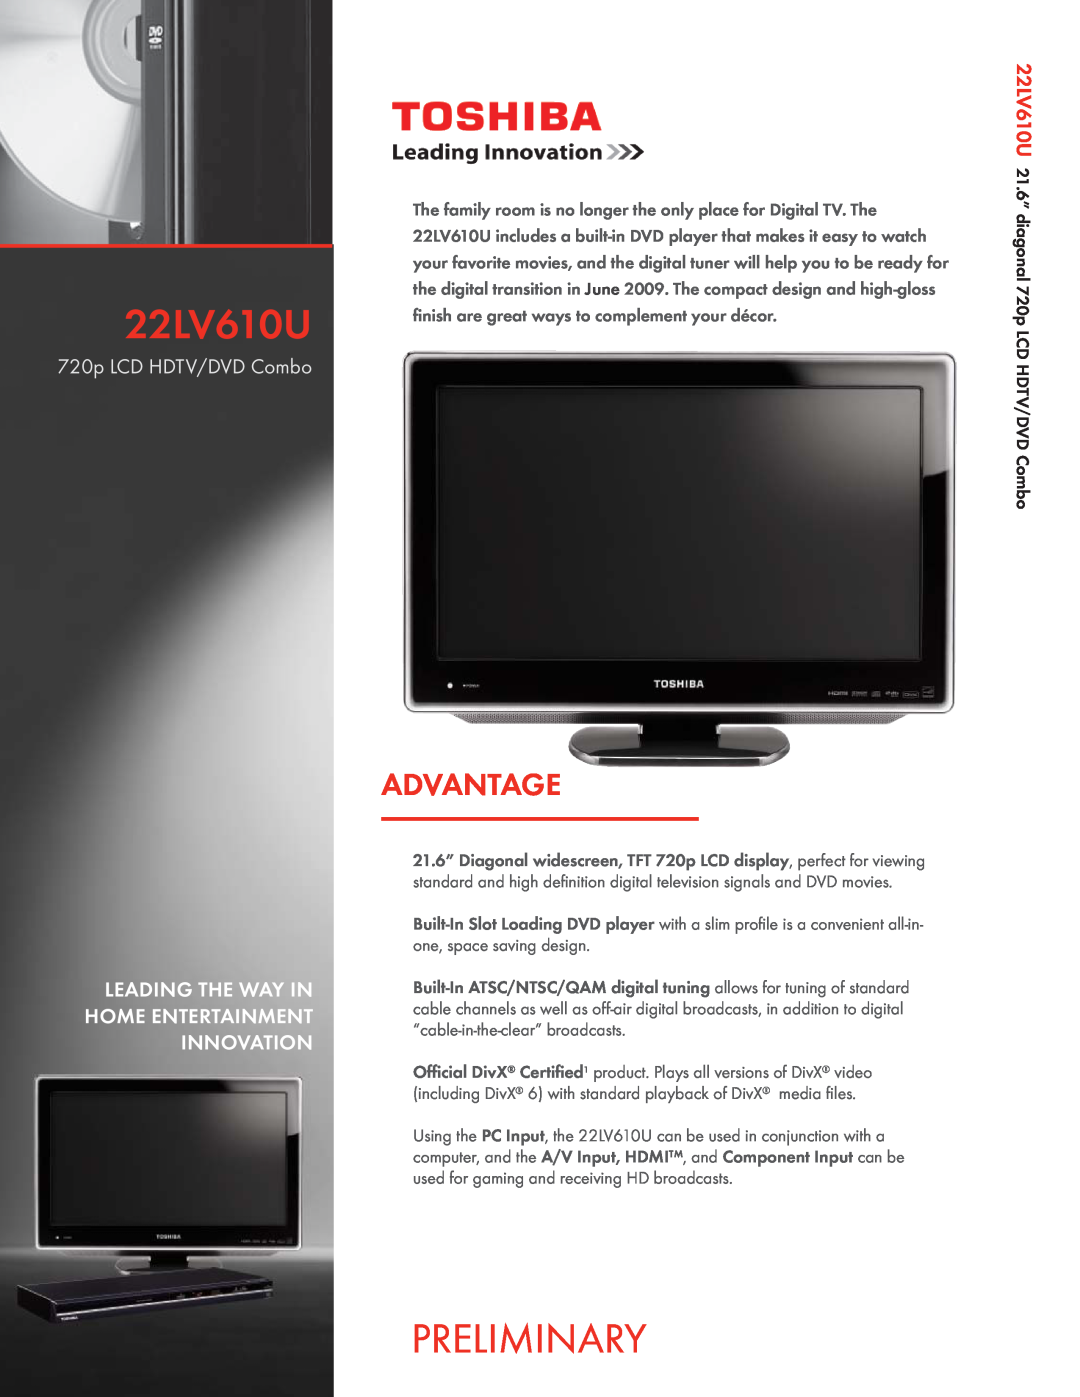 Toshiba manual Preliminary, Advantage, 720p LCD HDTV/DVD Combo, 22LV610U 21.6” 